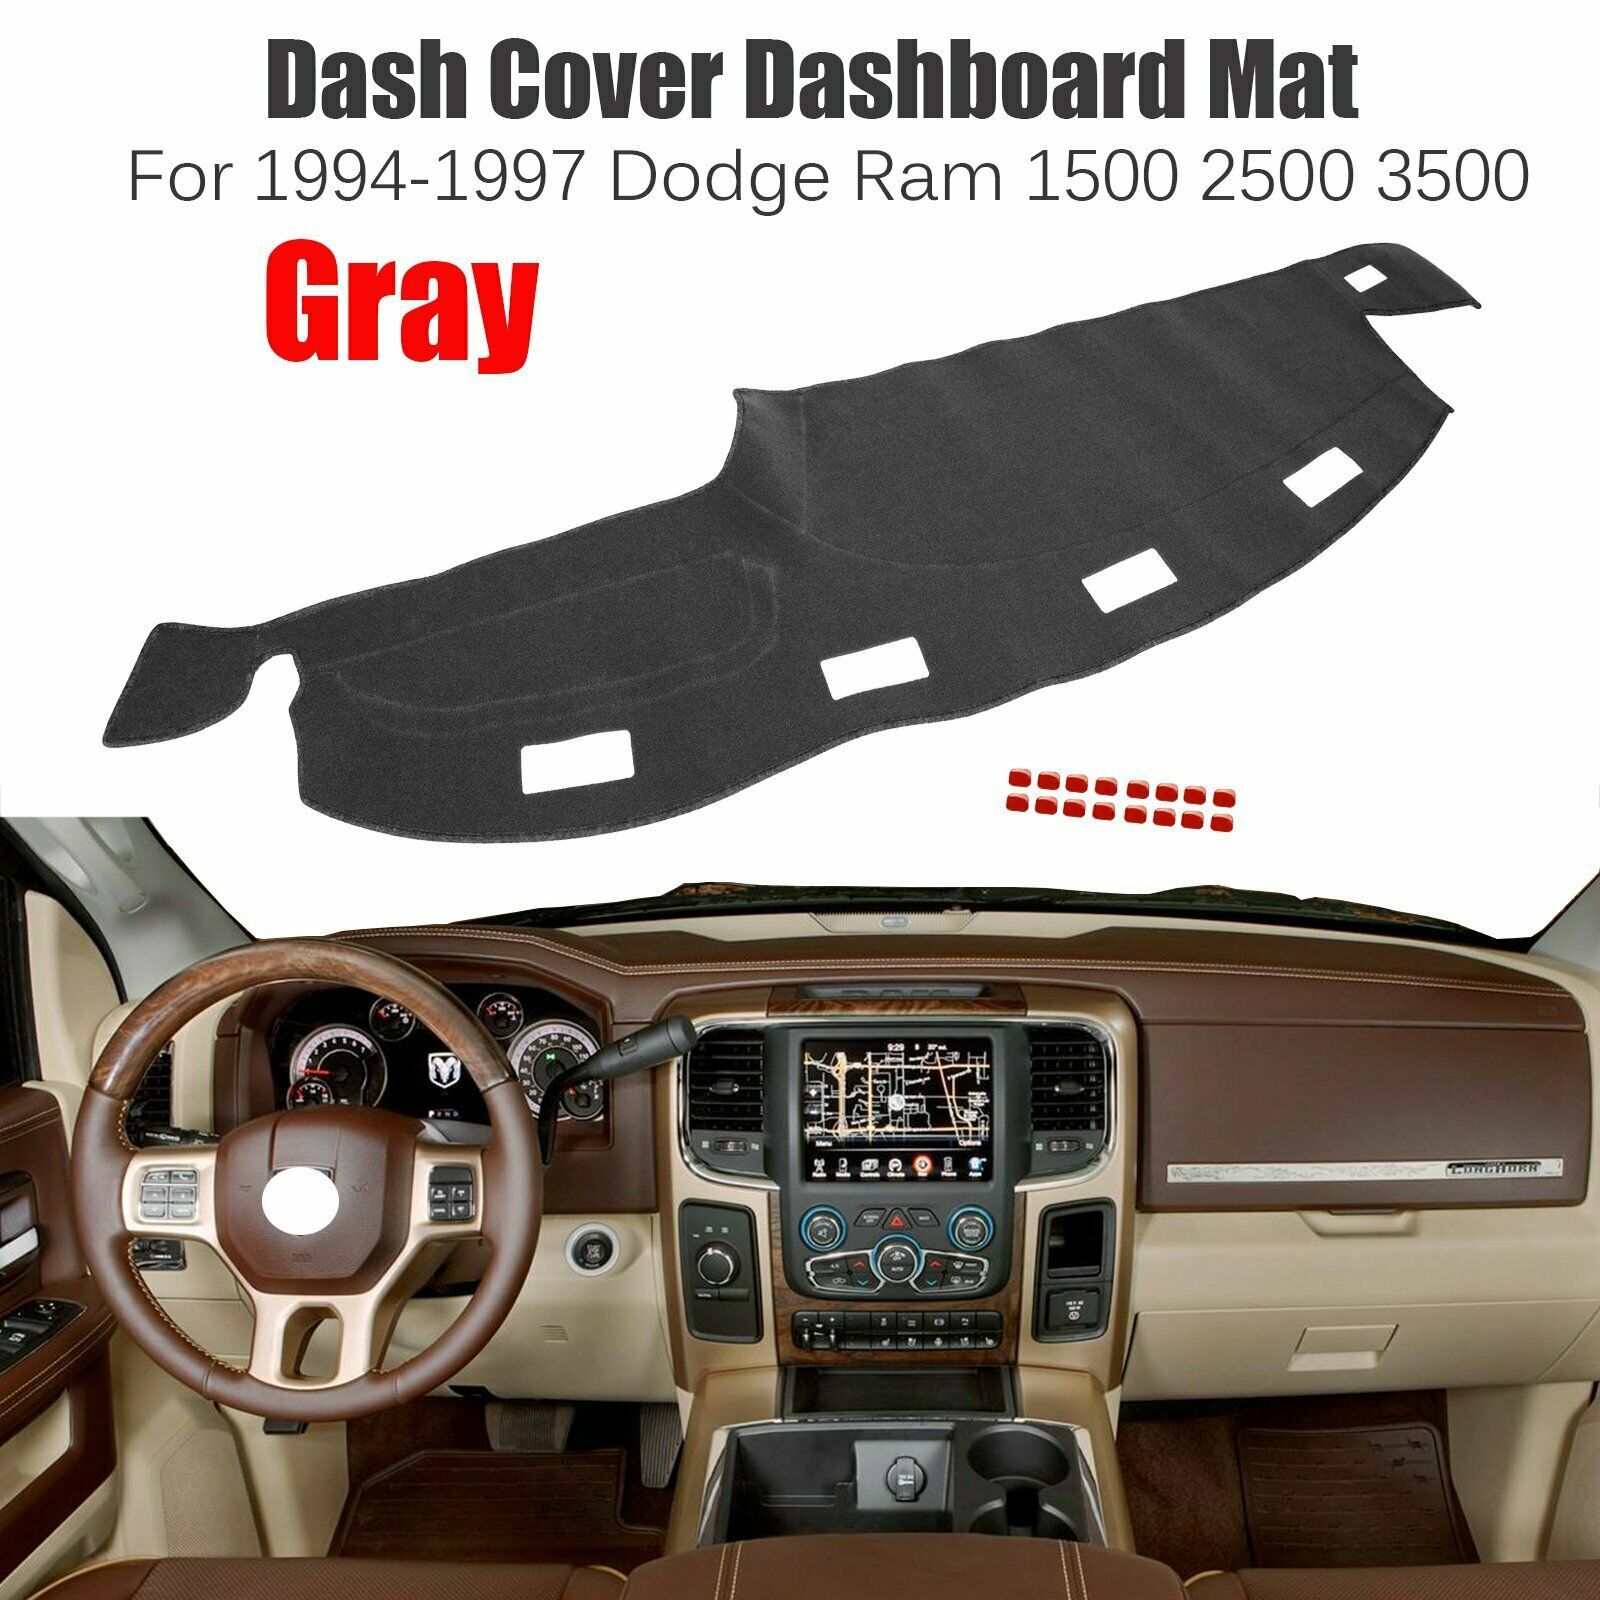 For 1994-1997 Dodge Ram 1500 2500 3500 Dash Cover Dashboard Pad Mat Carpet Gray